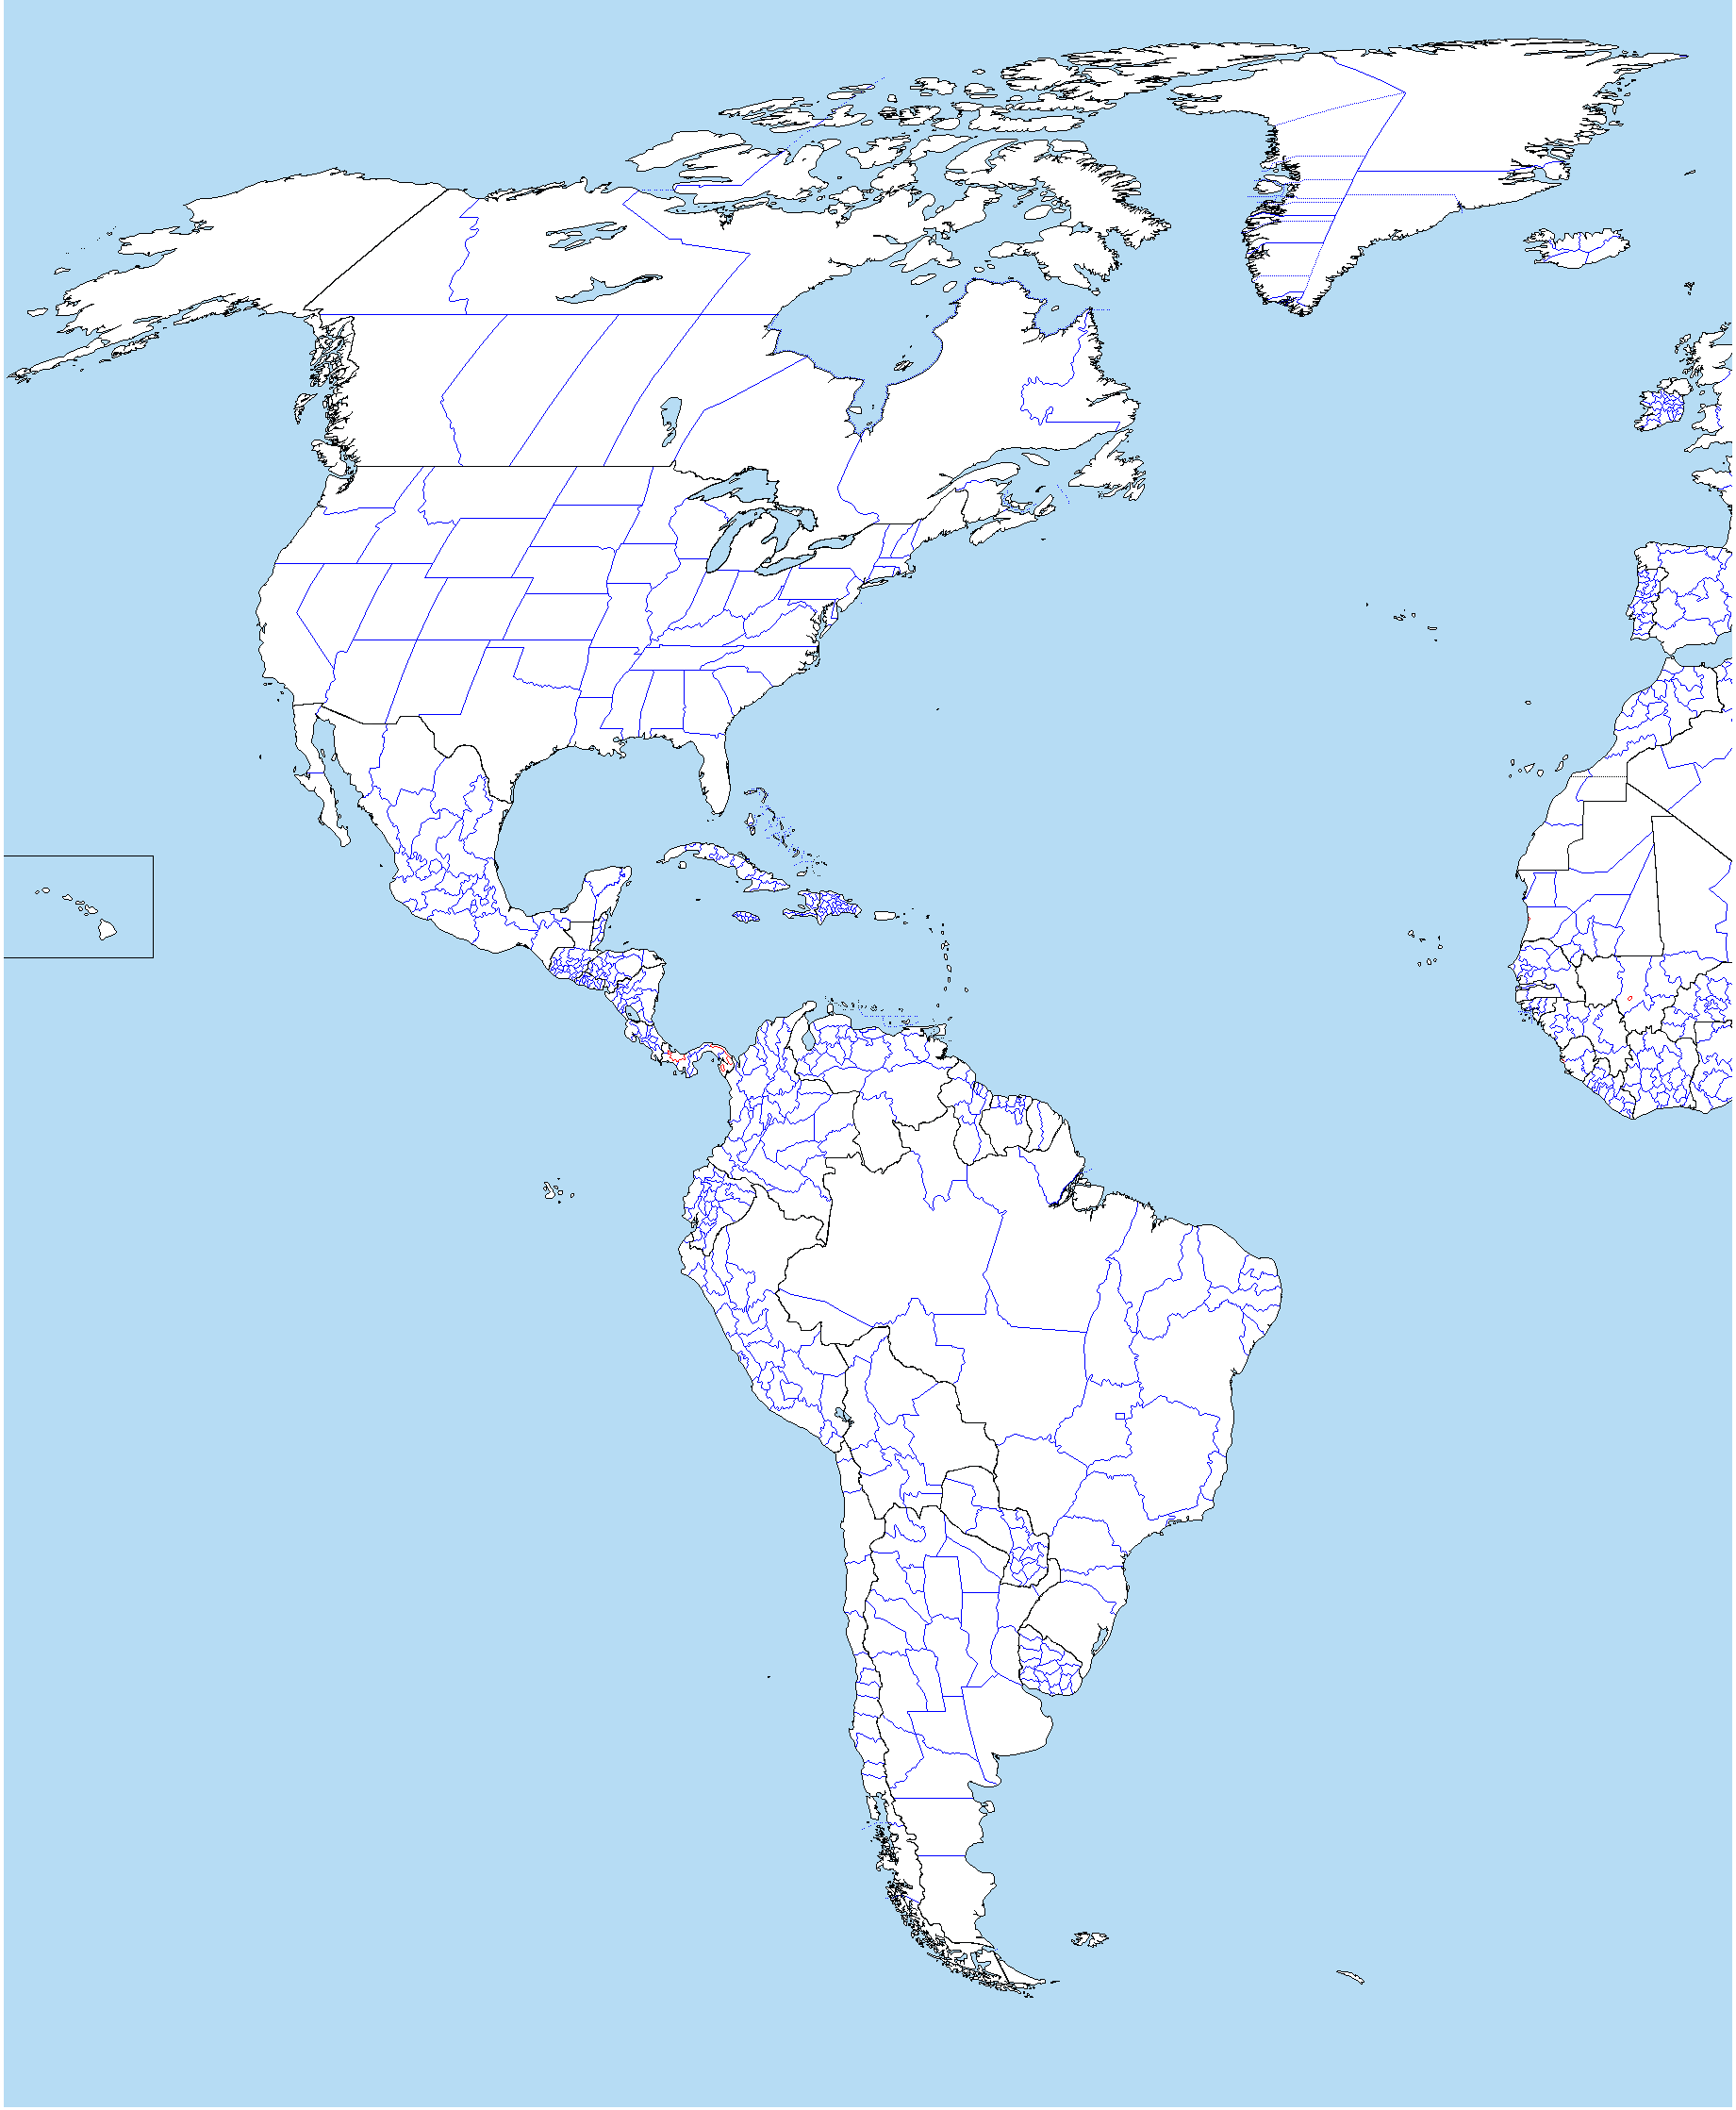 new world map